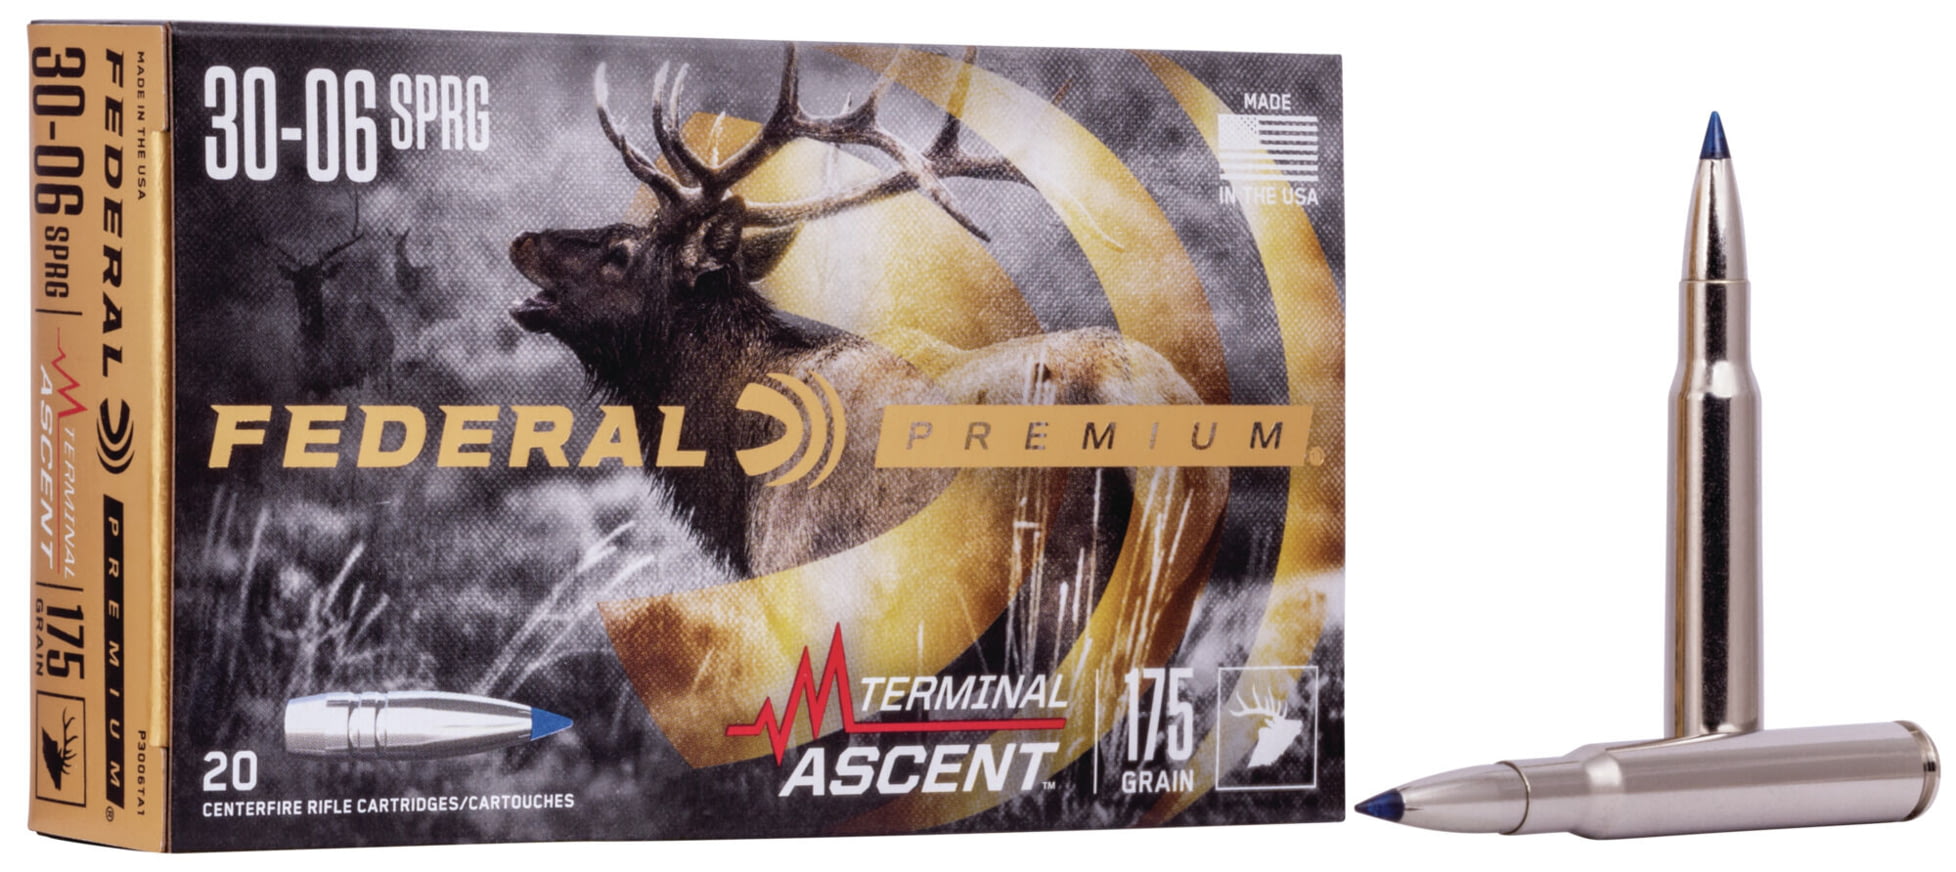 Federal Premium TERMINAL ASCENT .30-06 Springfield 175 grain Terminal Ascent Centerfire Rifle Ammunition